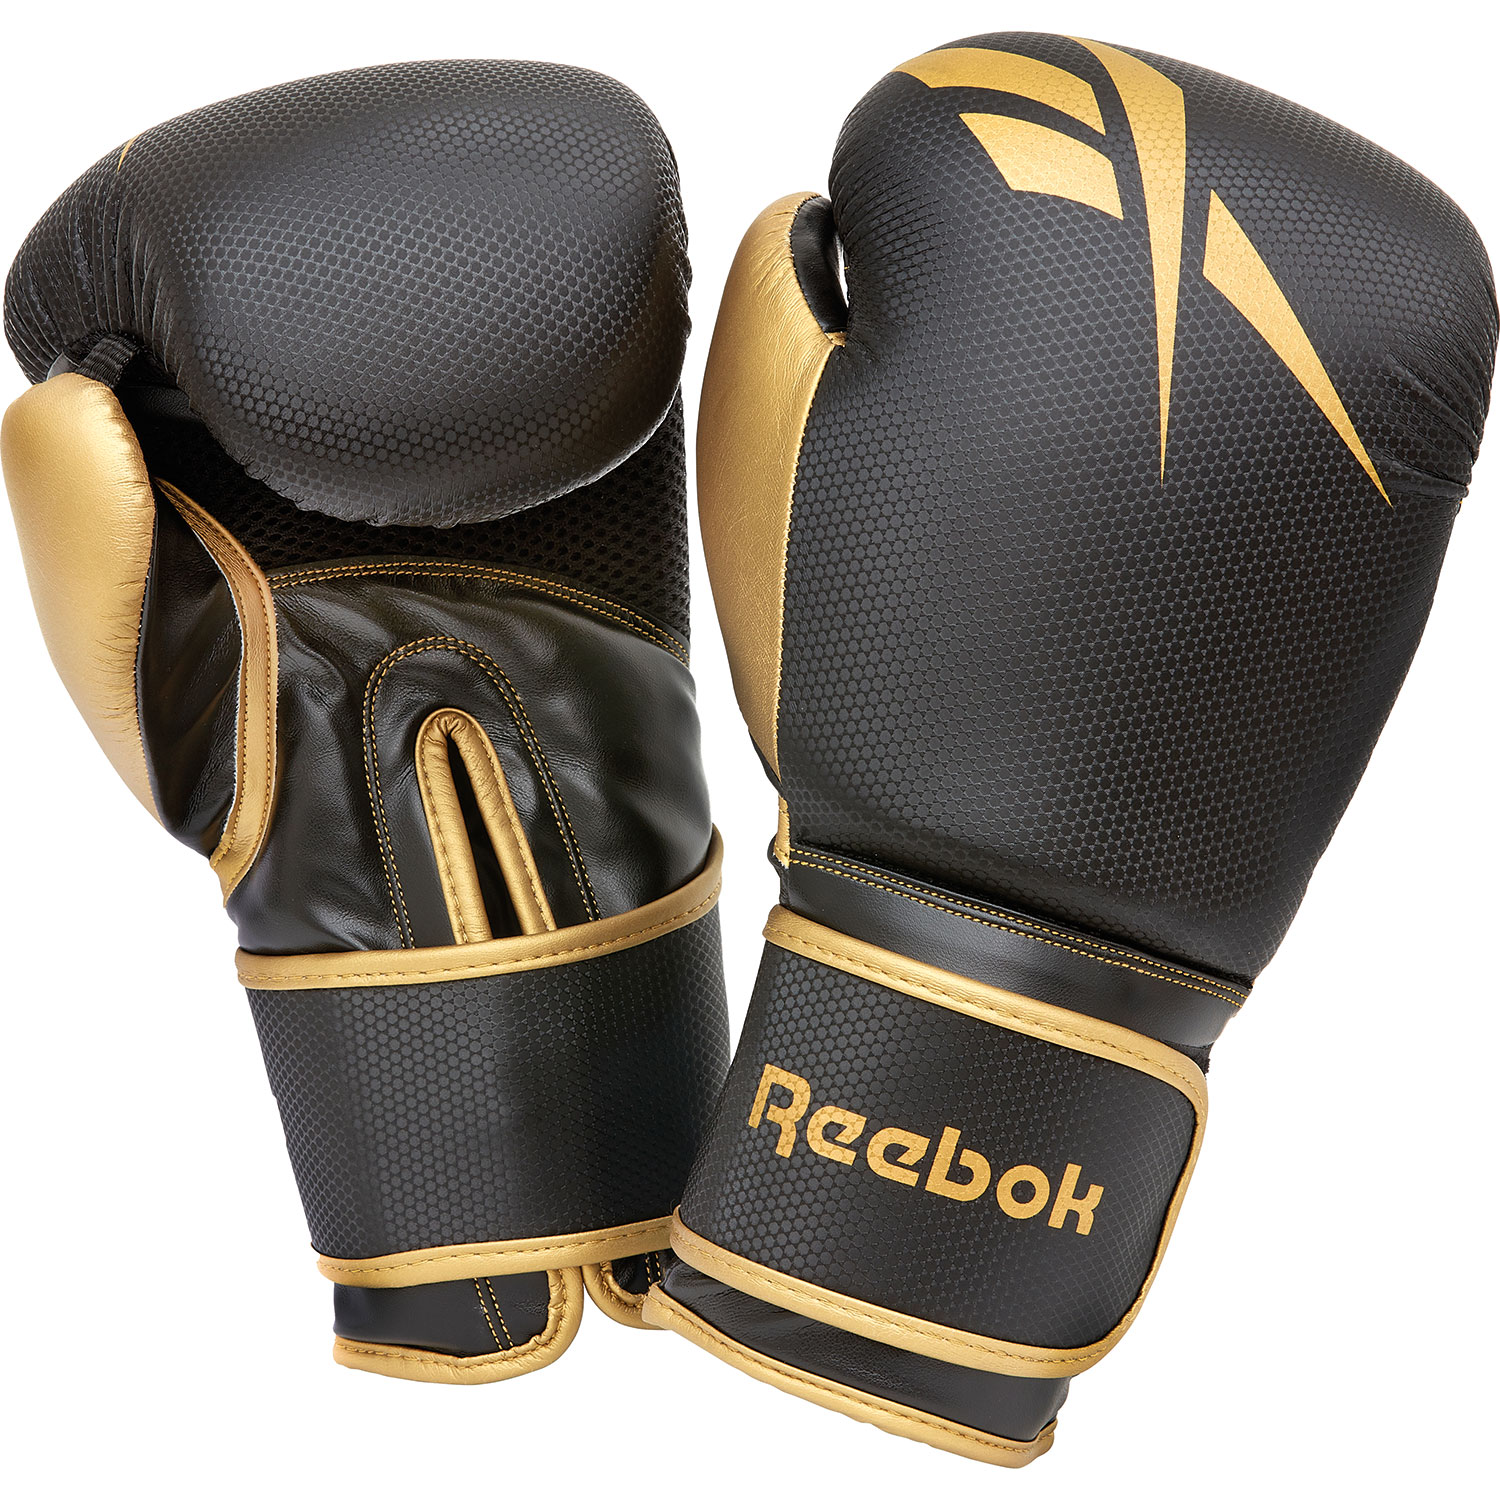 Reebok boxing gloves gold/black 16 oz